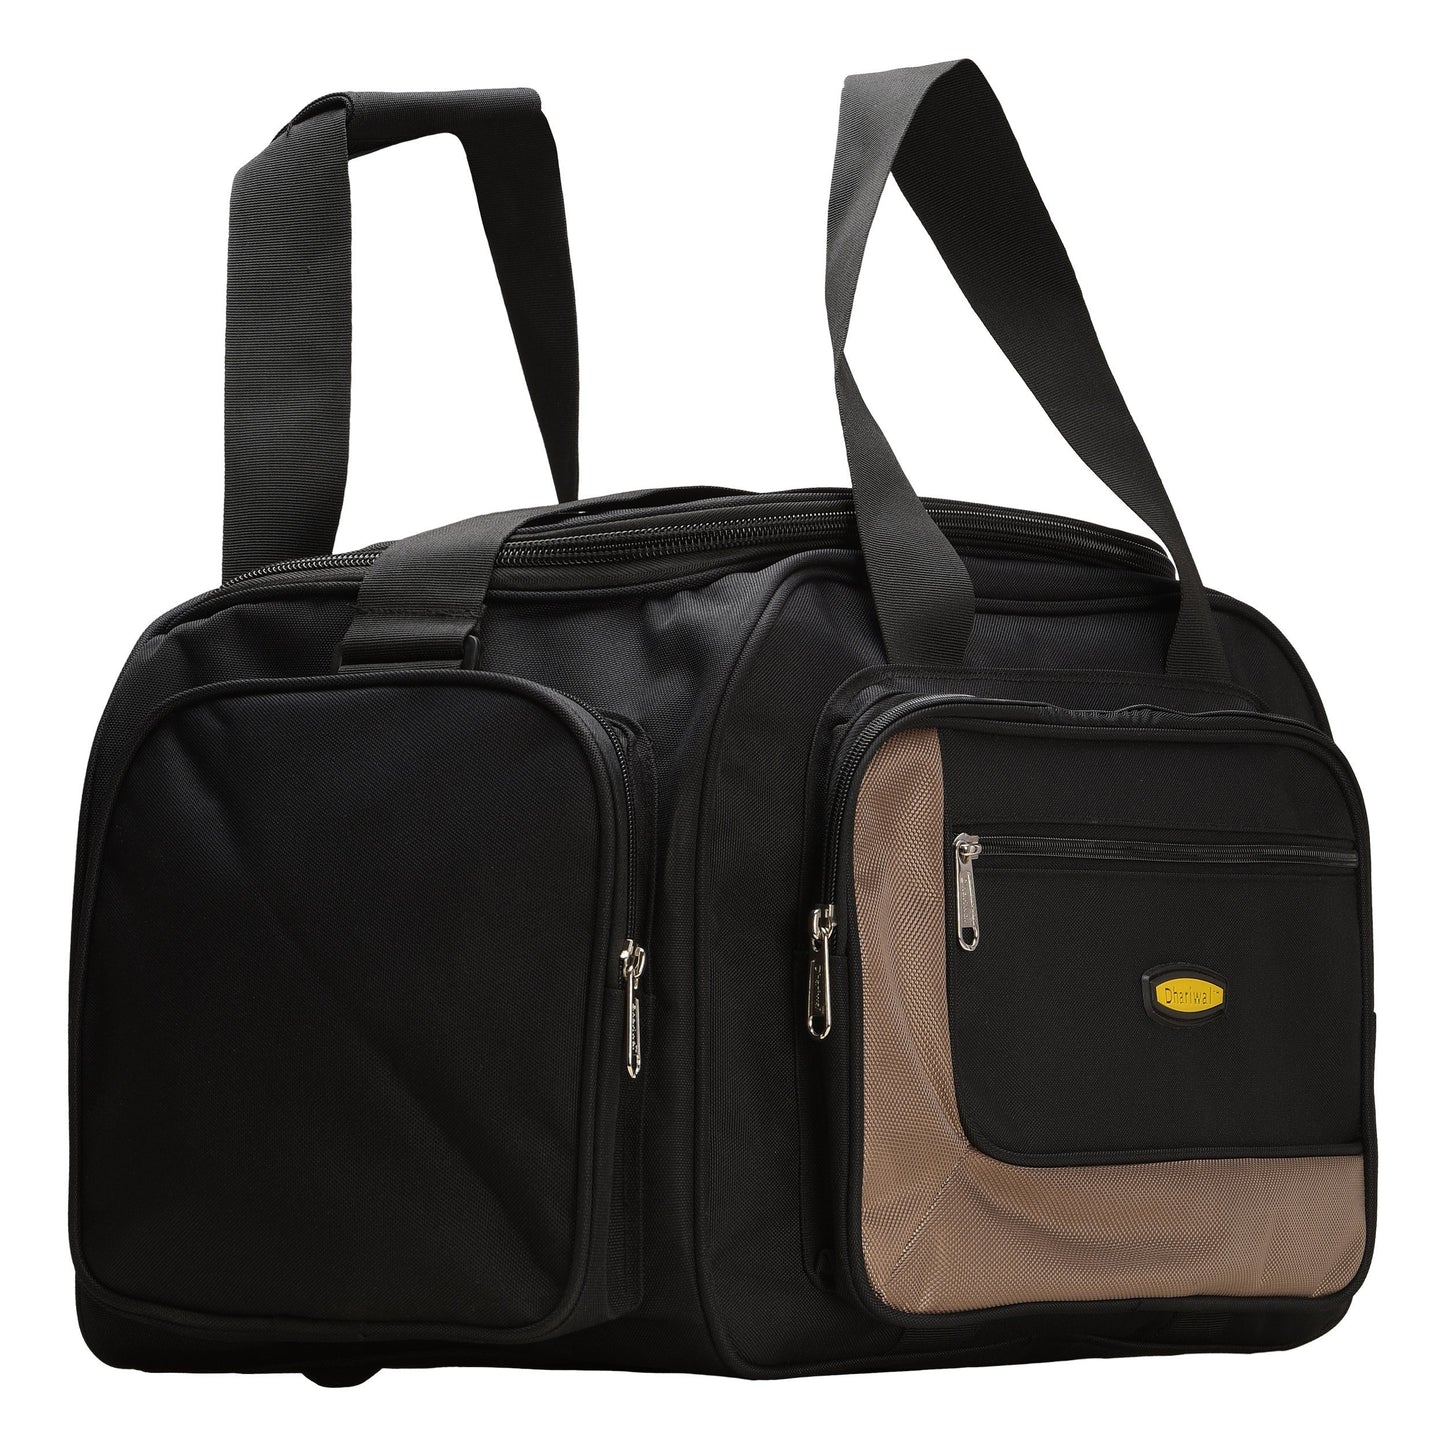 Handy Travelling Bag D Design 900 X 900 Matty 61cm x 30cm x 28 cm TRB-501 Travelling Bags Dhariwal 